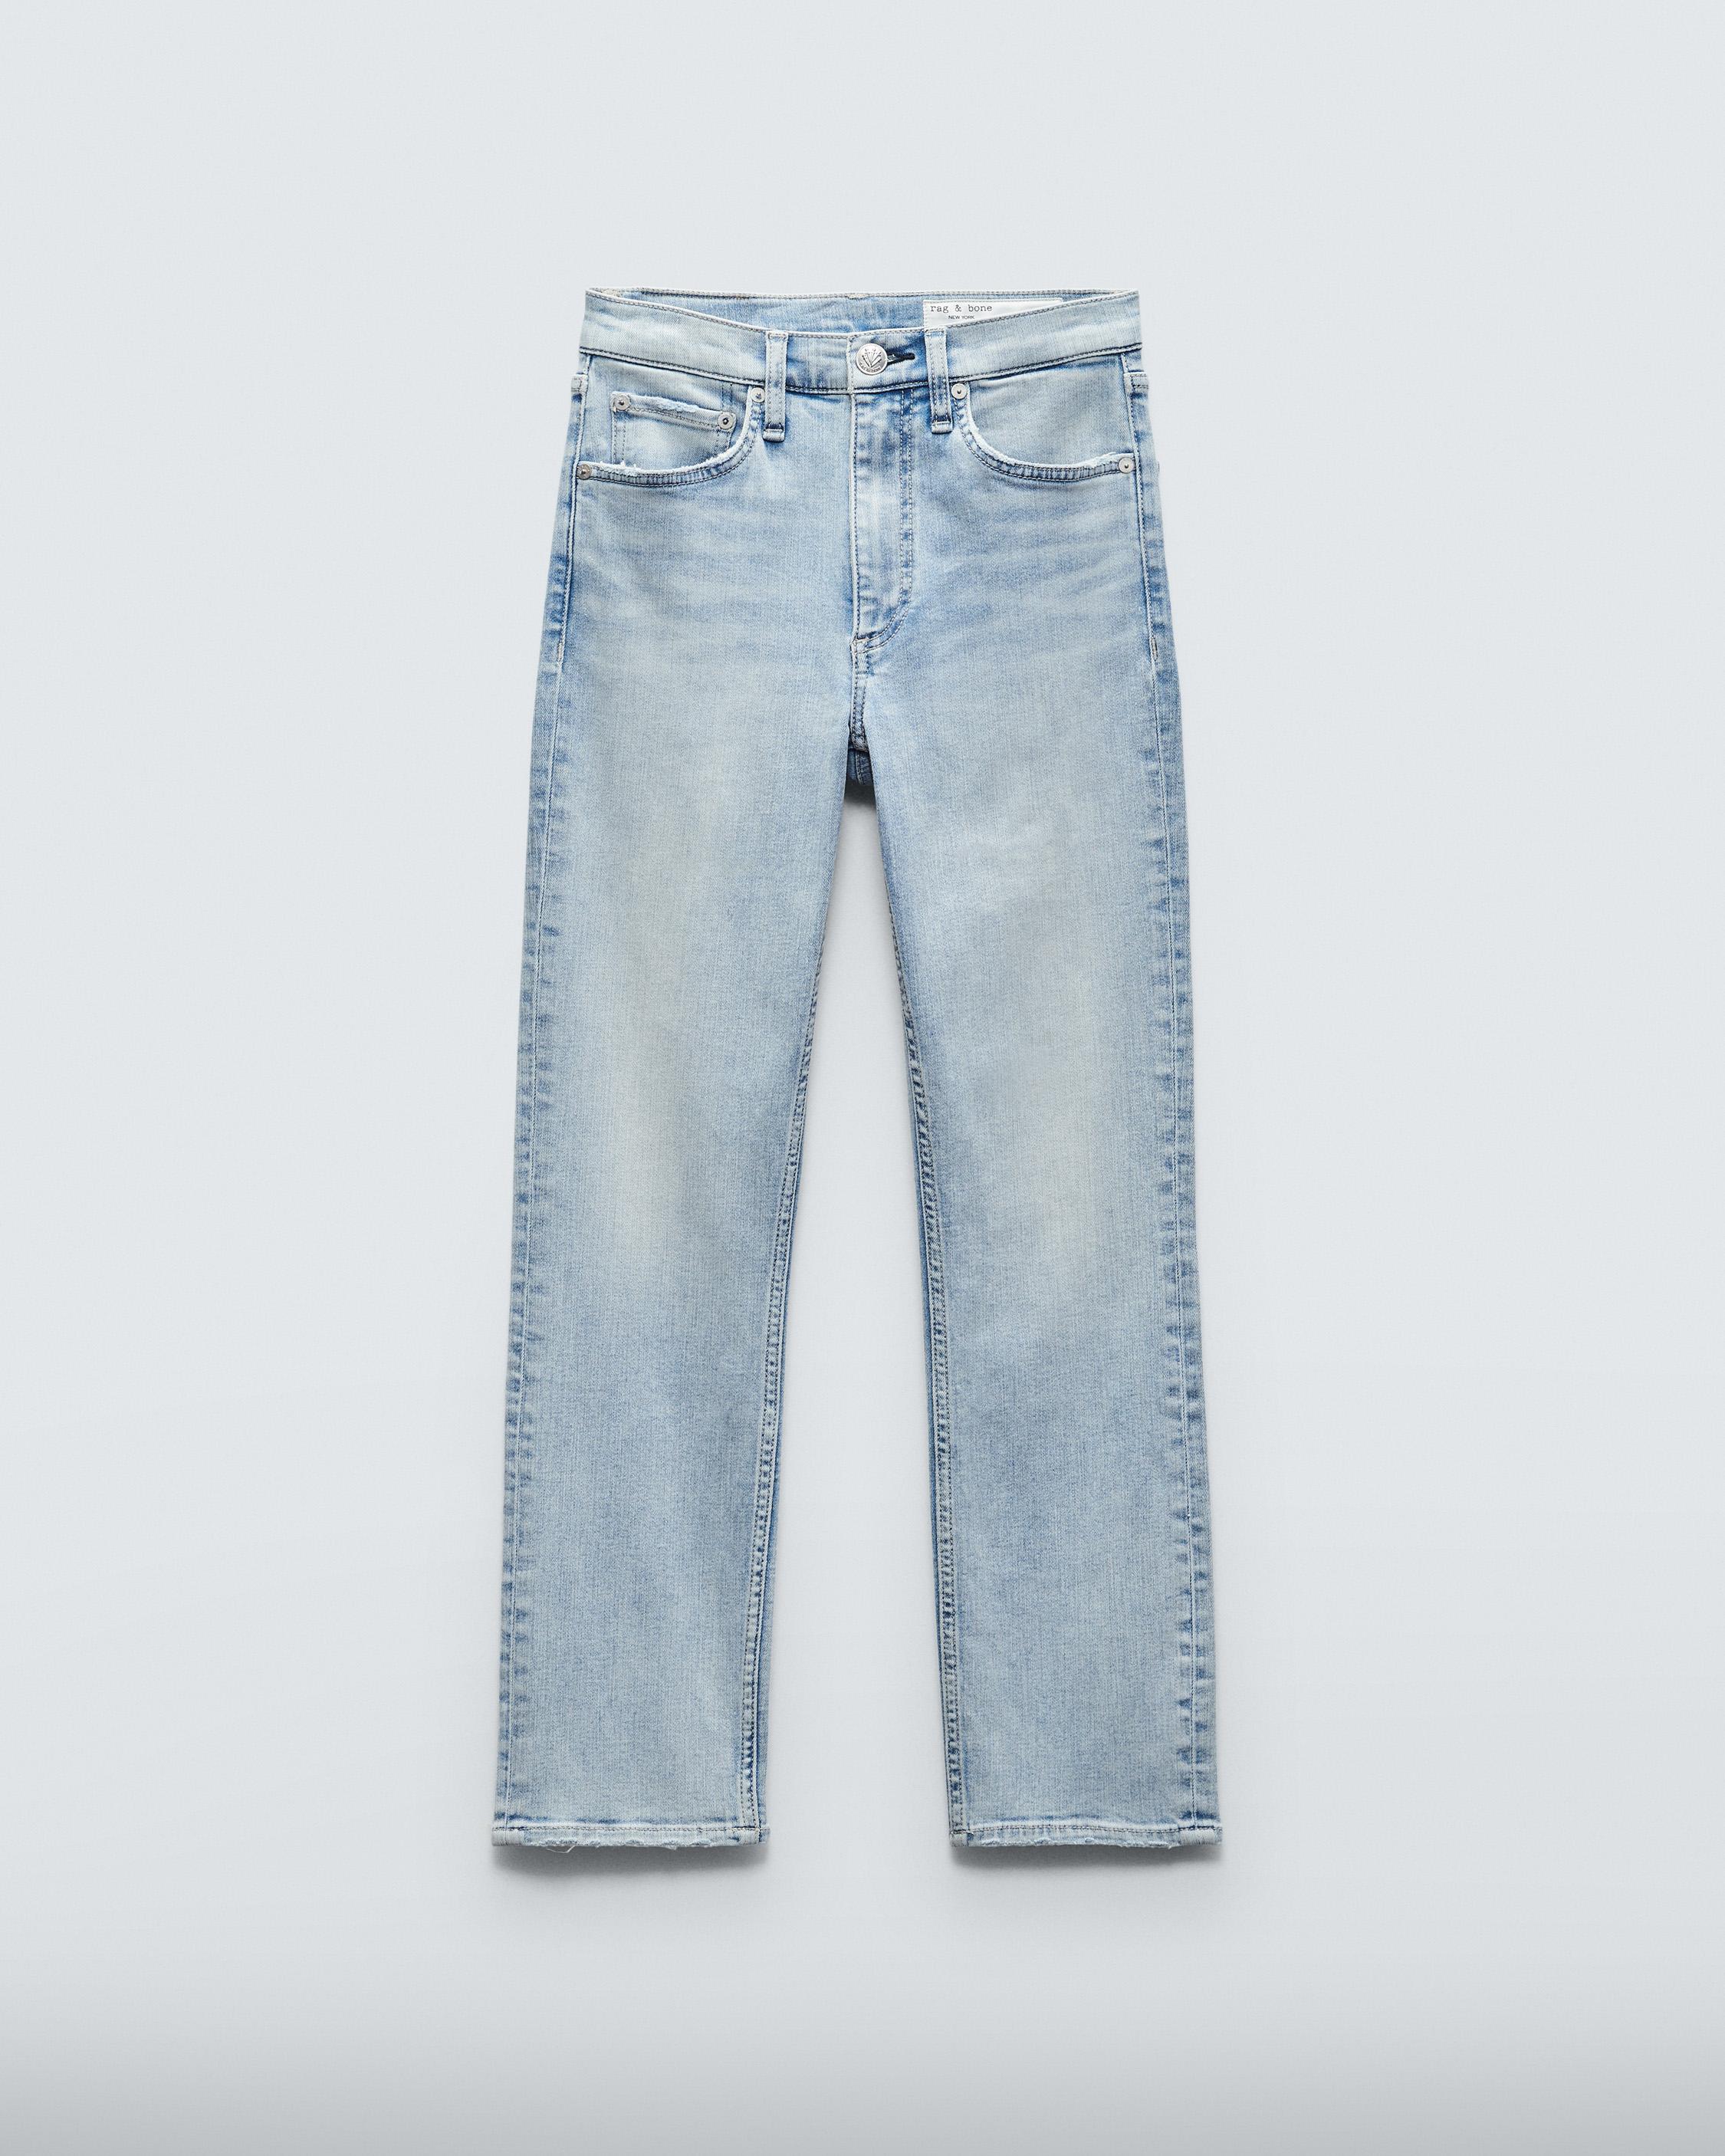 H&M Feather Soft Low Jeggings  Mid rise jeans, Blue denim pants